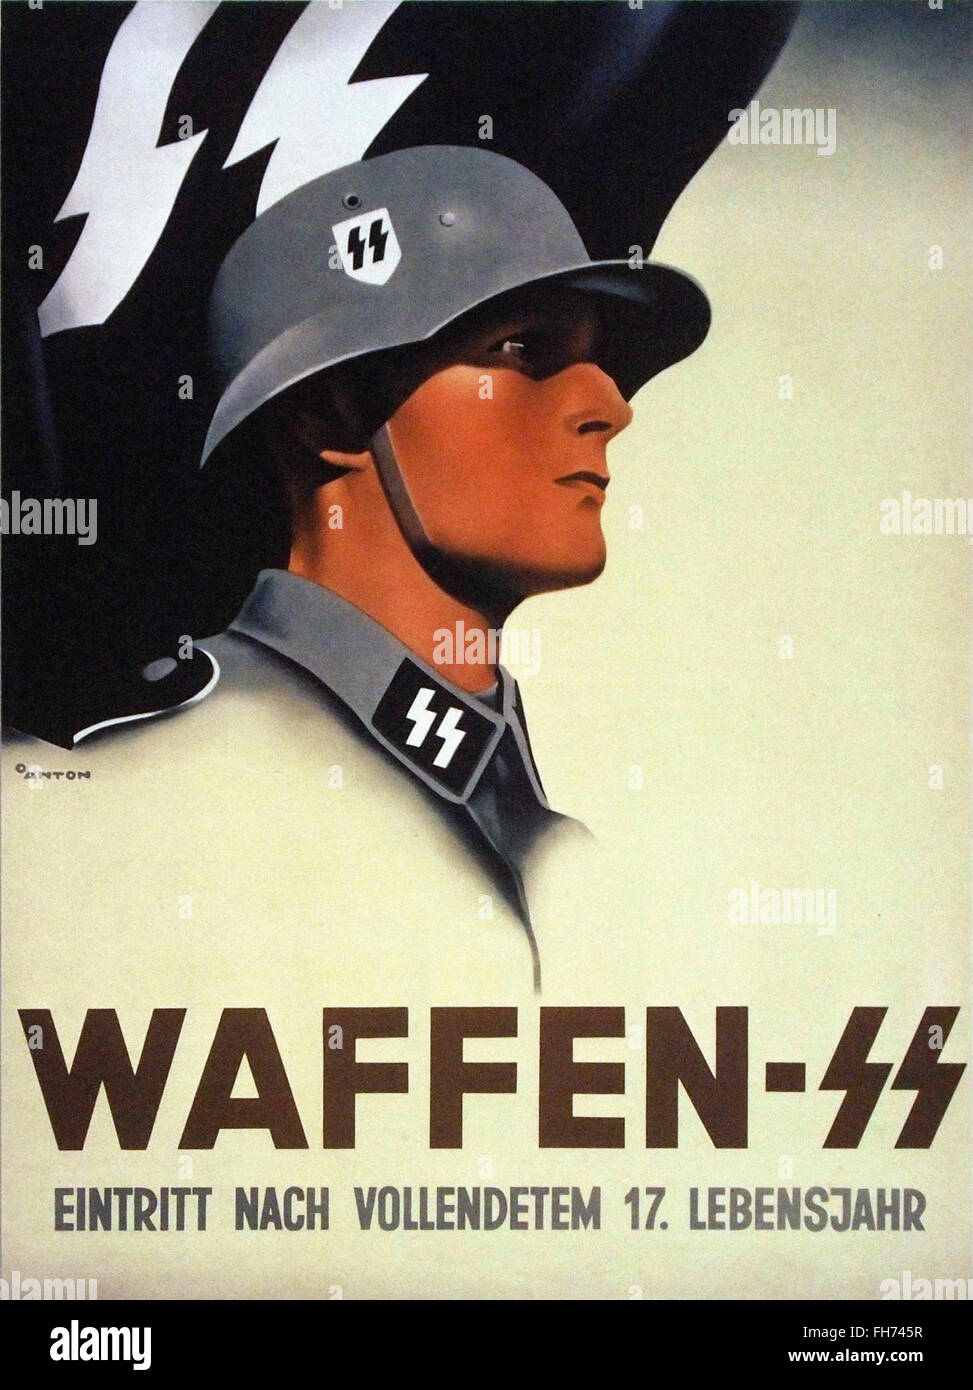 Waffen SS - Affiche de propagande nazie allemande - WWII Banque D'Images